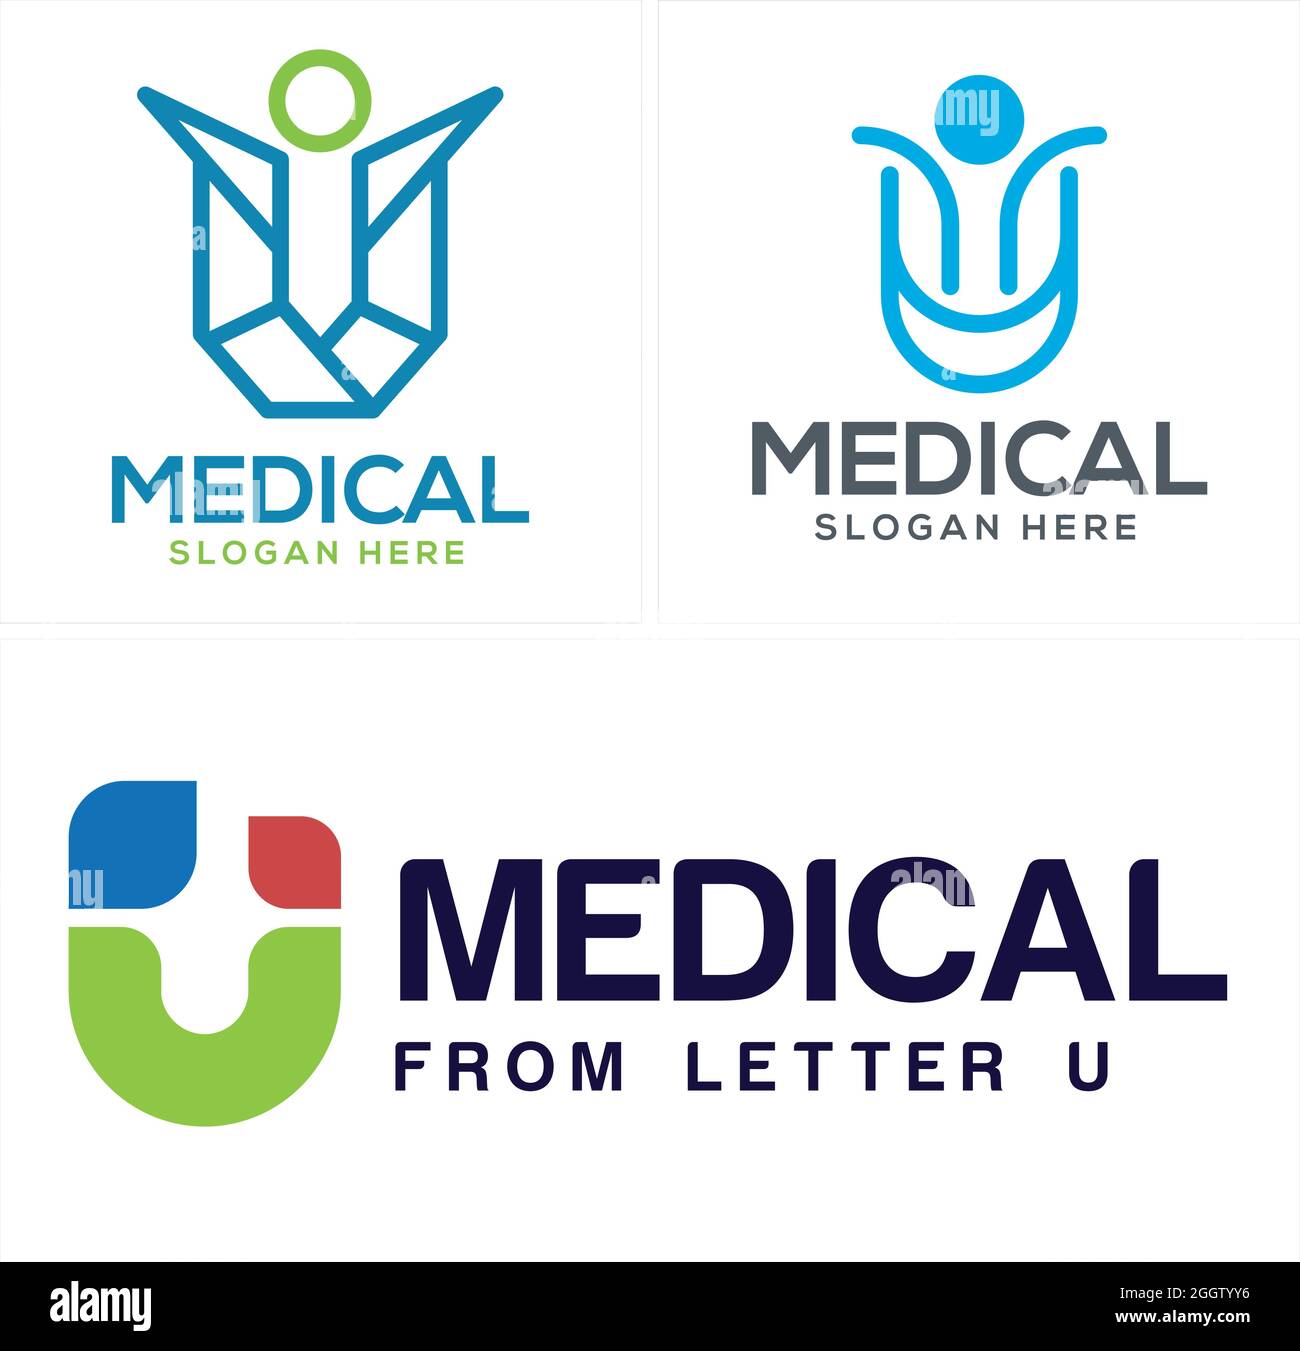 Medical pharmaceutical mobile app people letter U logo design  Stock Vector